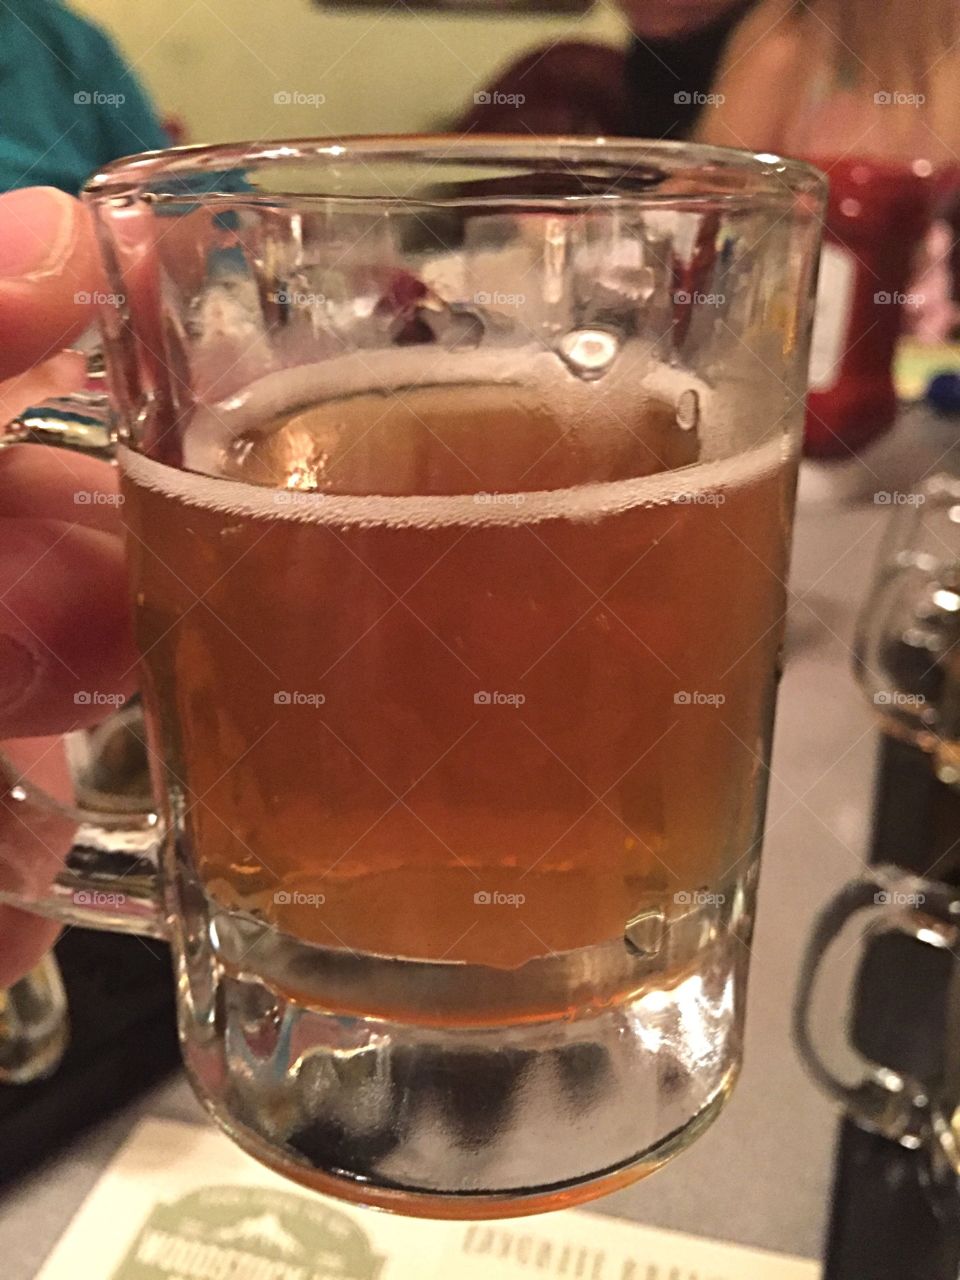 Sampler glass of beer.